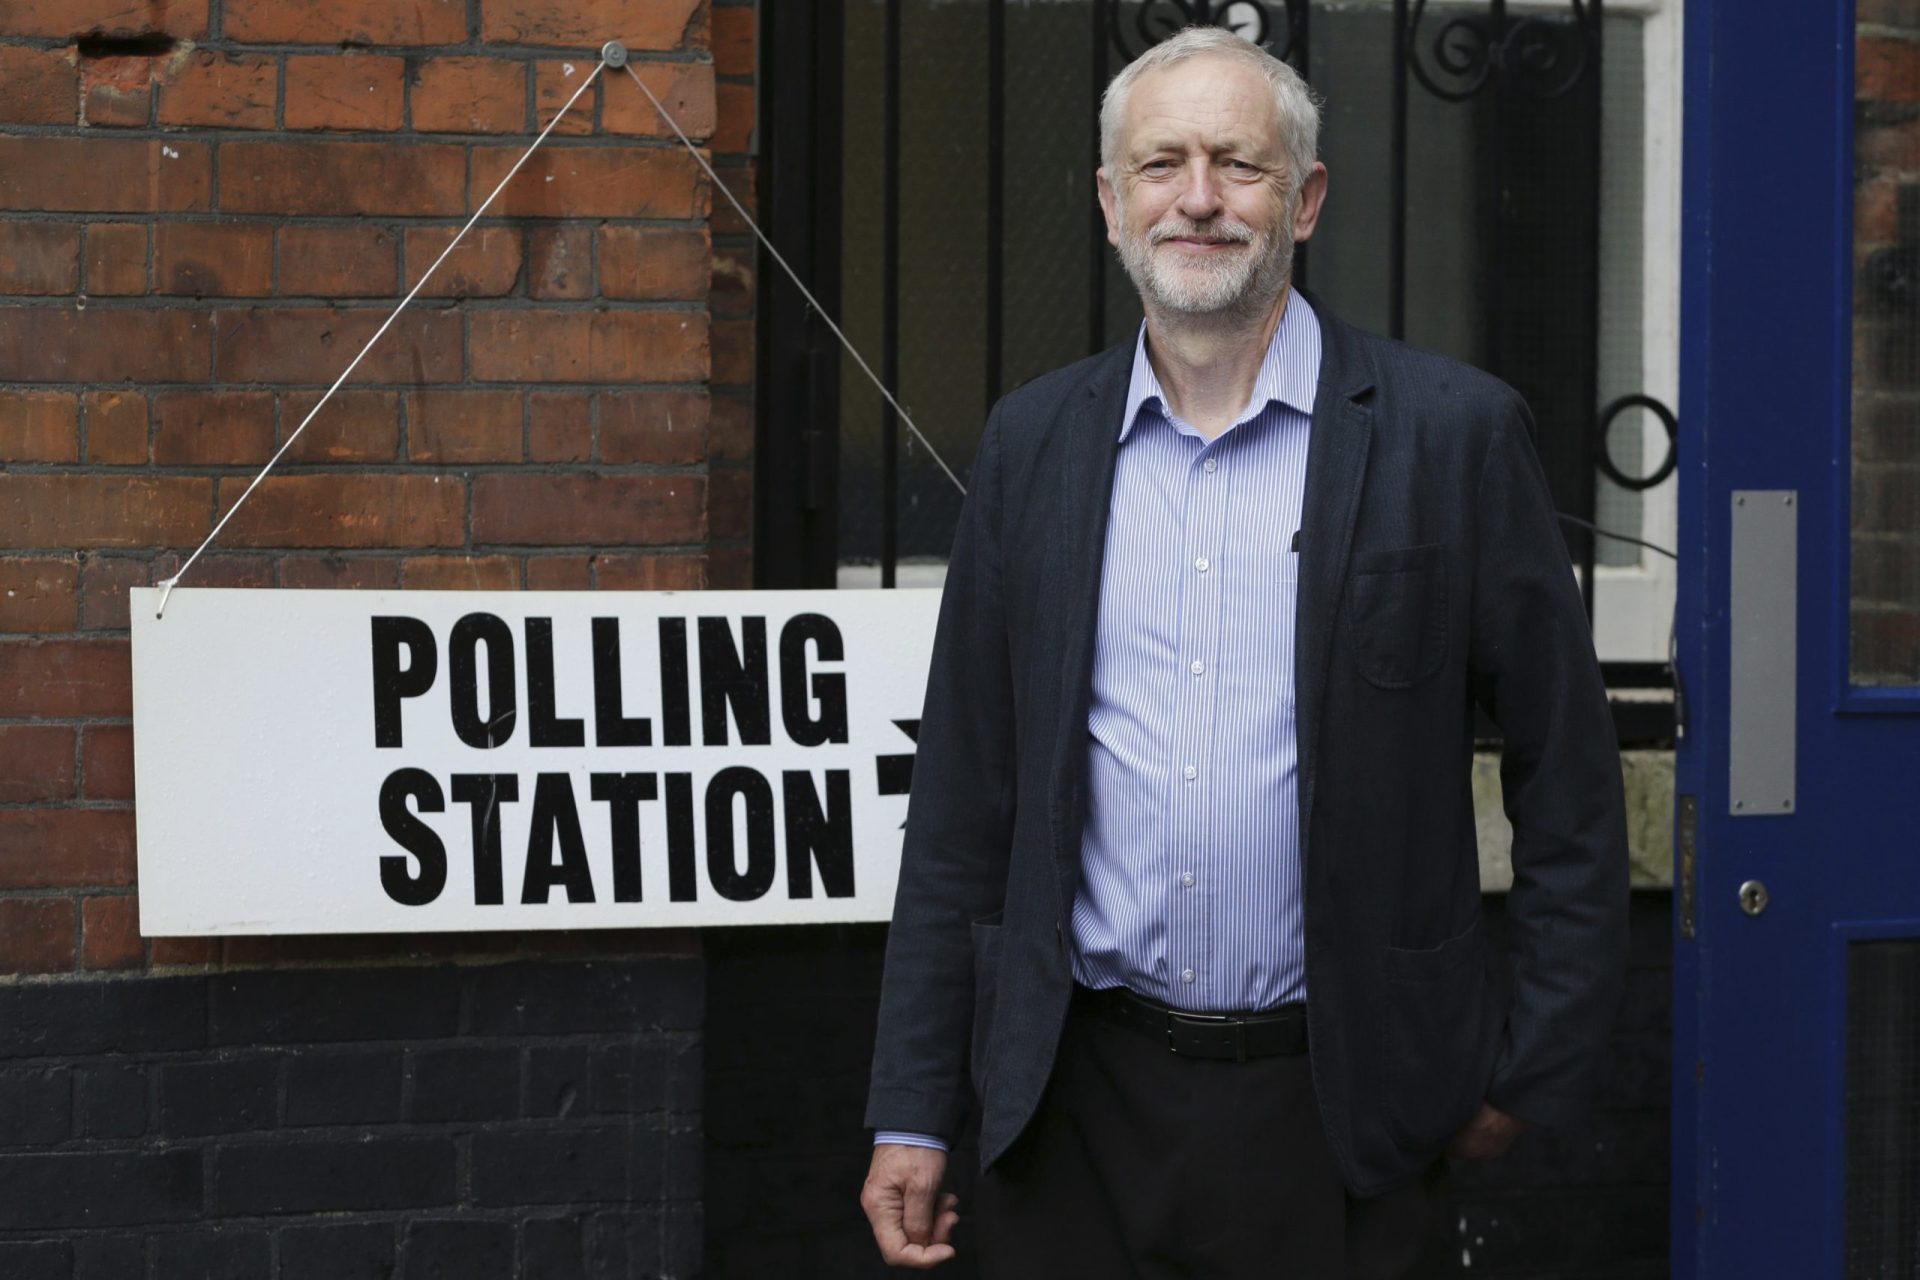 Labour: Angela Eagle candidata-se contra Corbyn